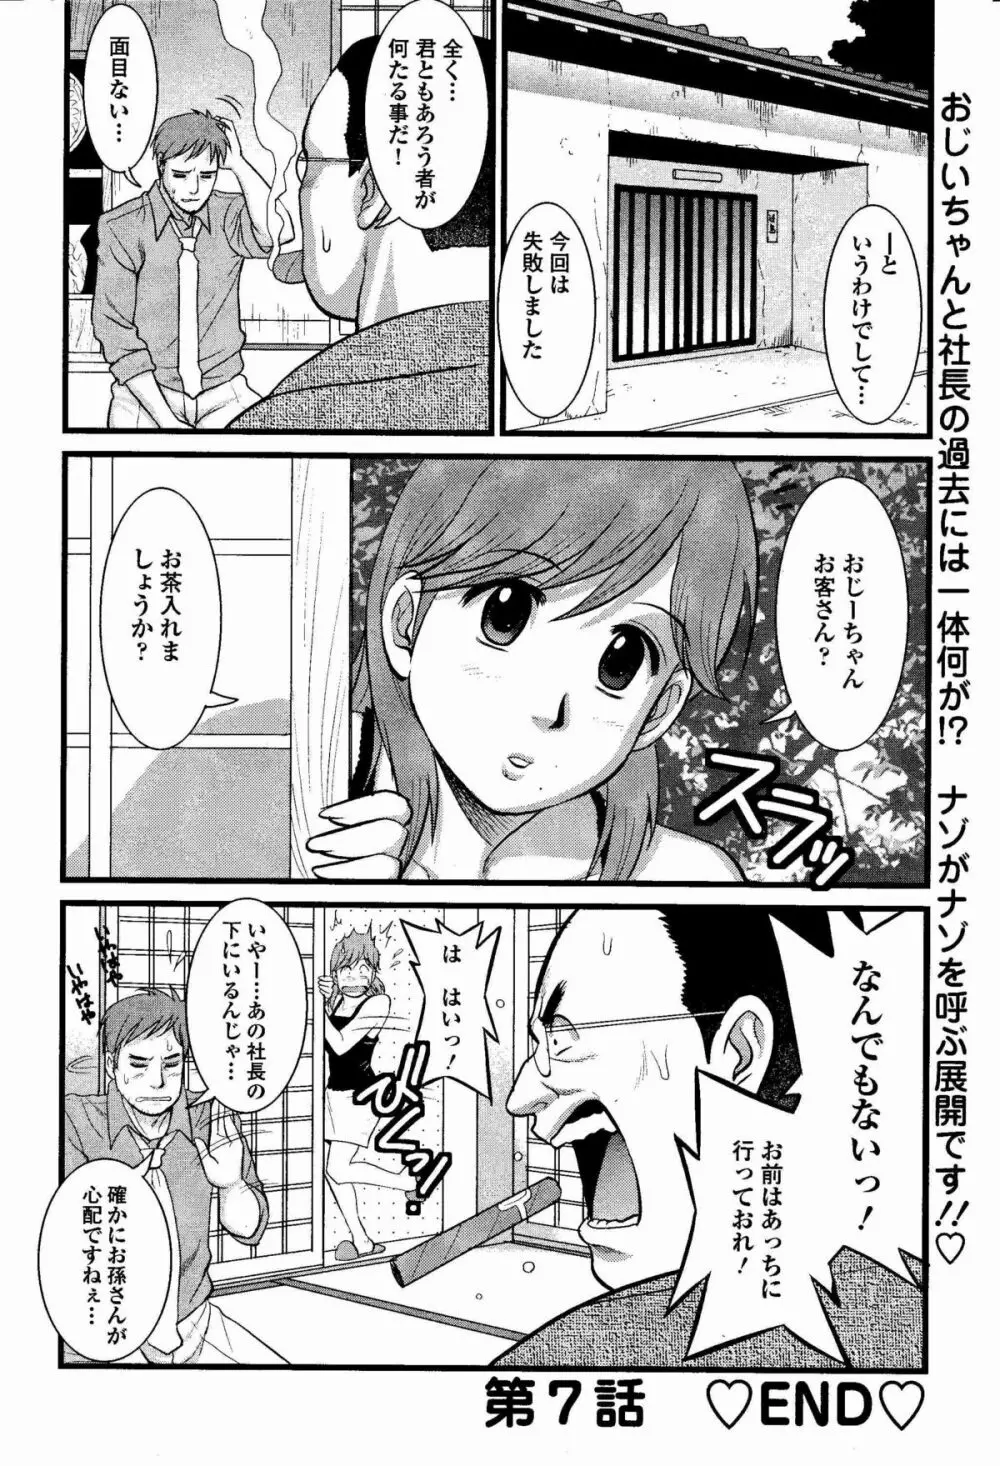 Haken no Muuko-san 7 21ページ